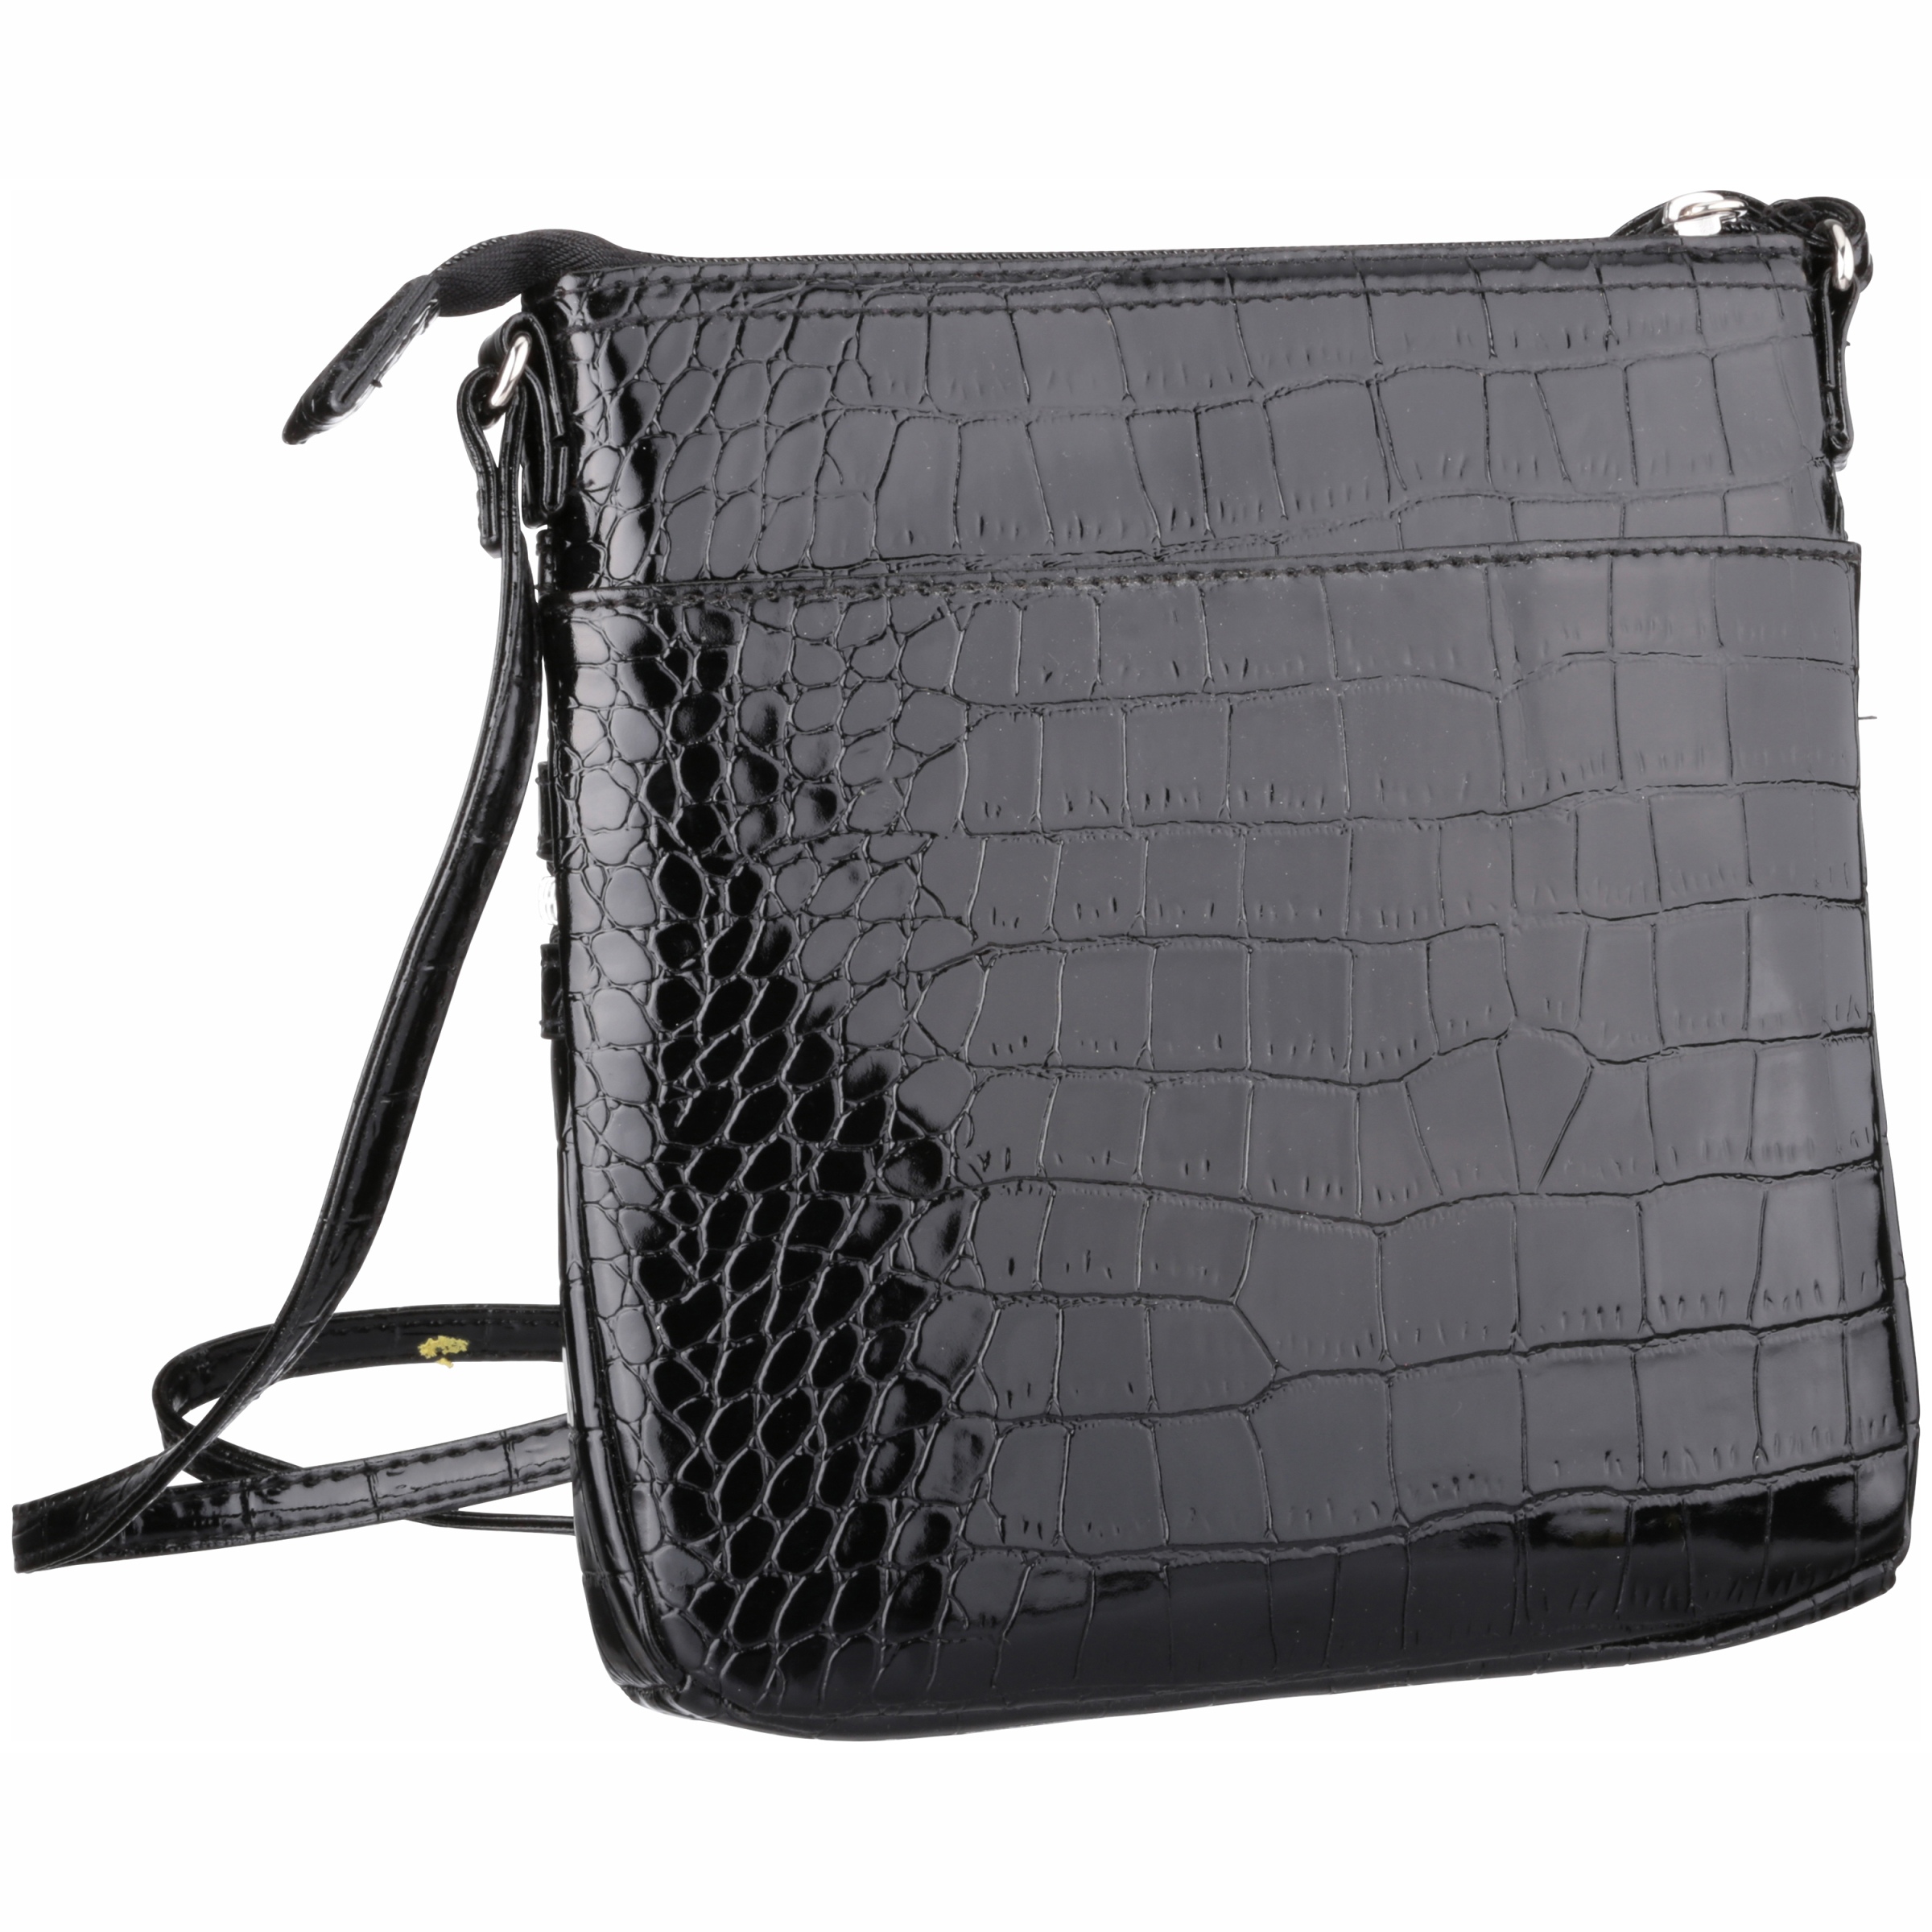 George® Shiny Black Handbag - image 2 of 5